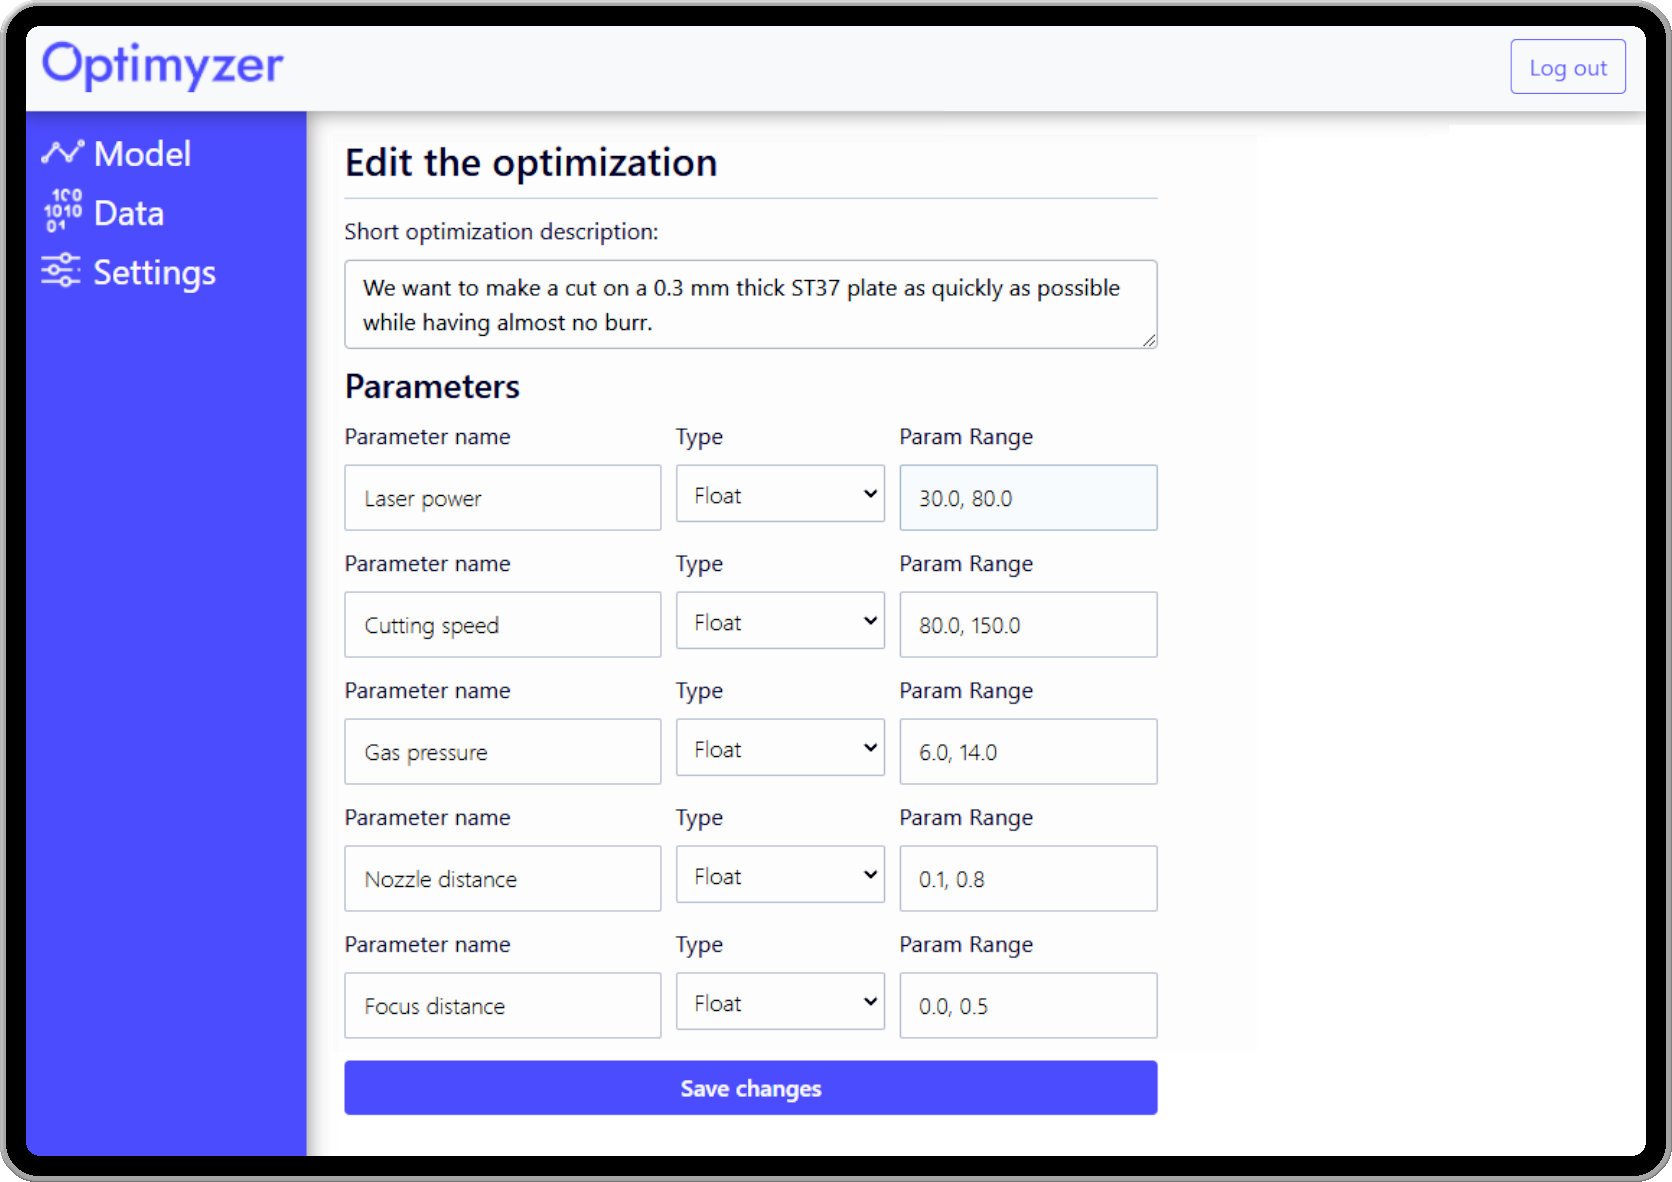 Optimization settings in the Optimyzer web-app